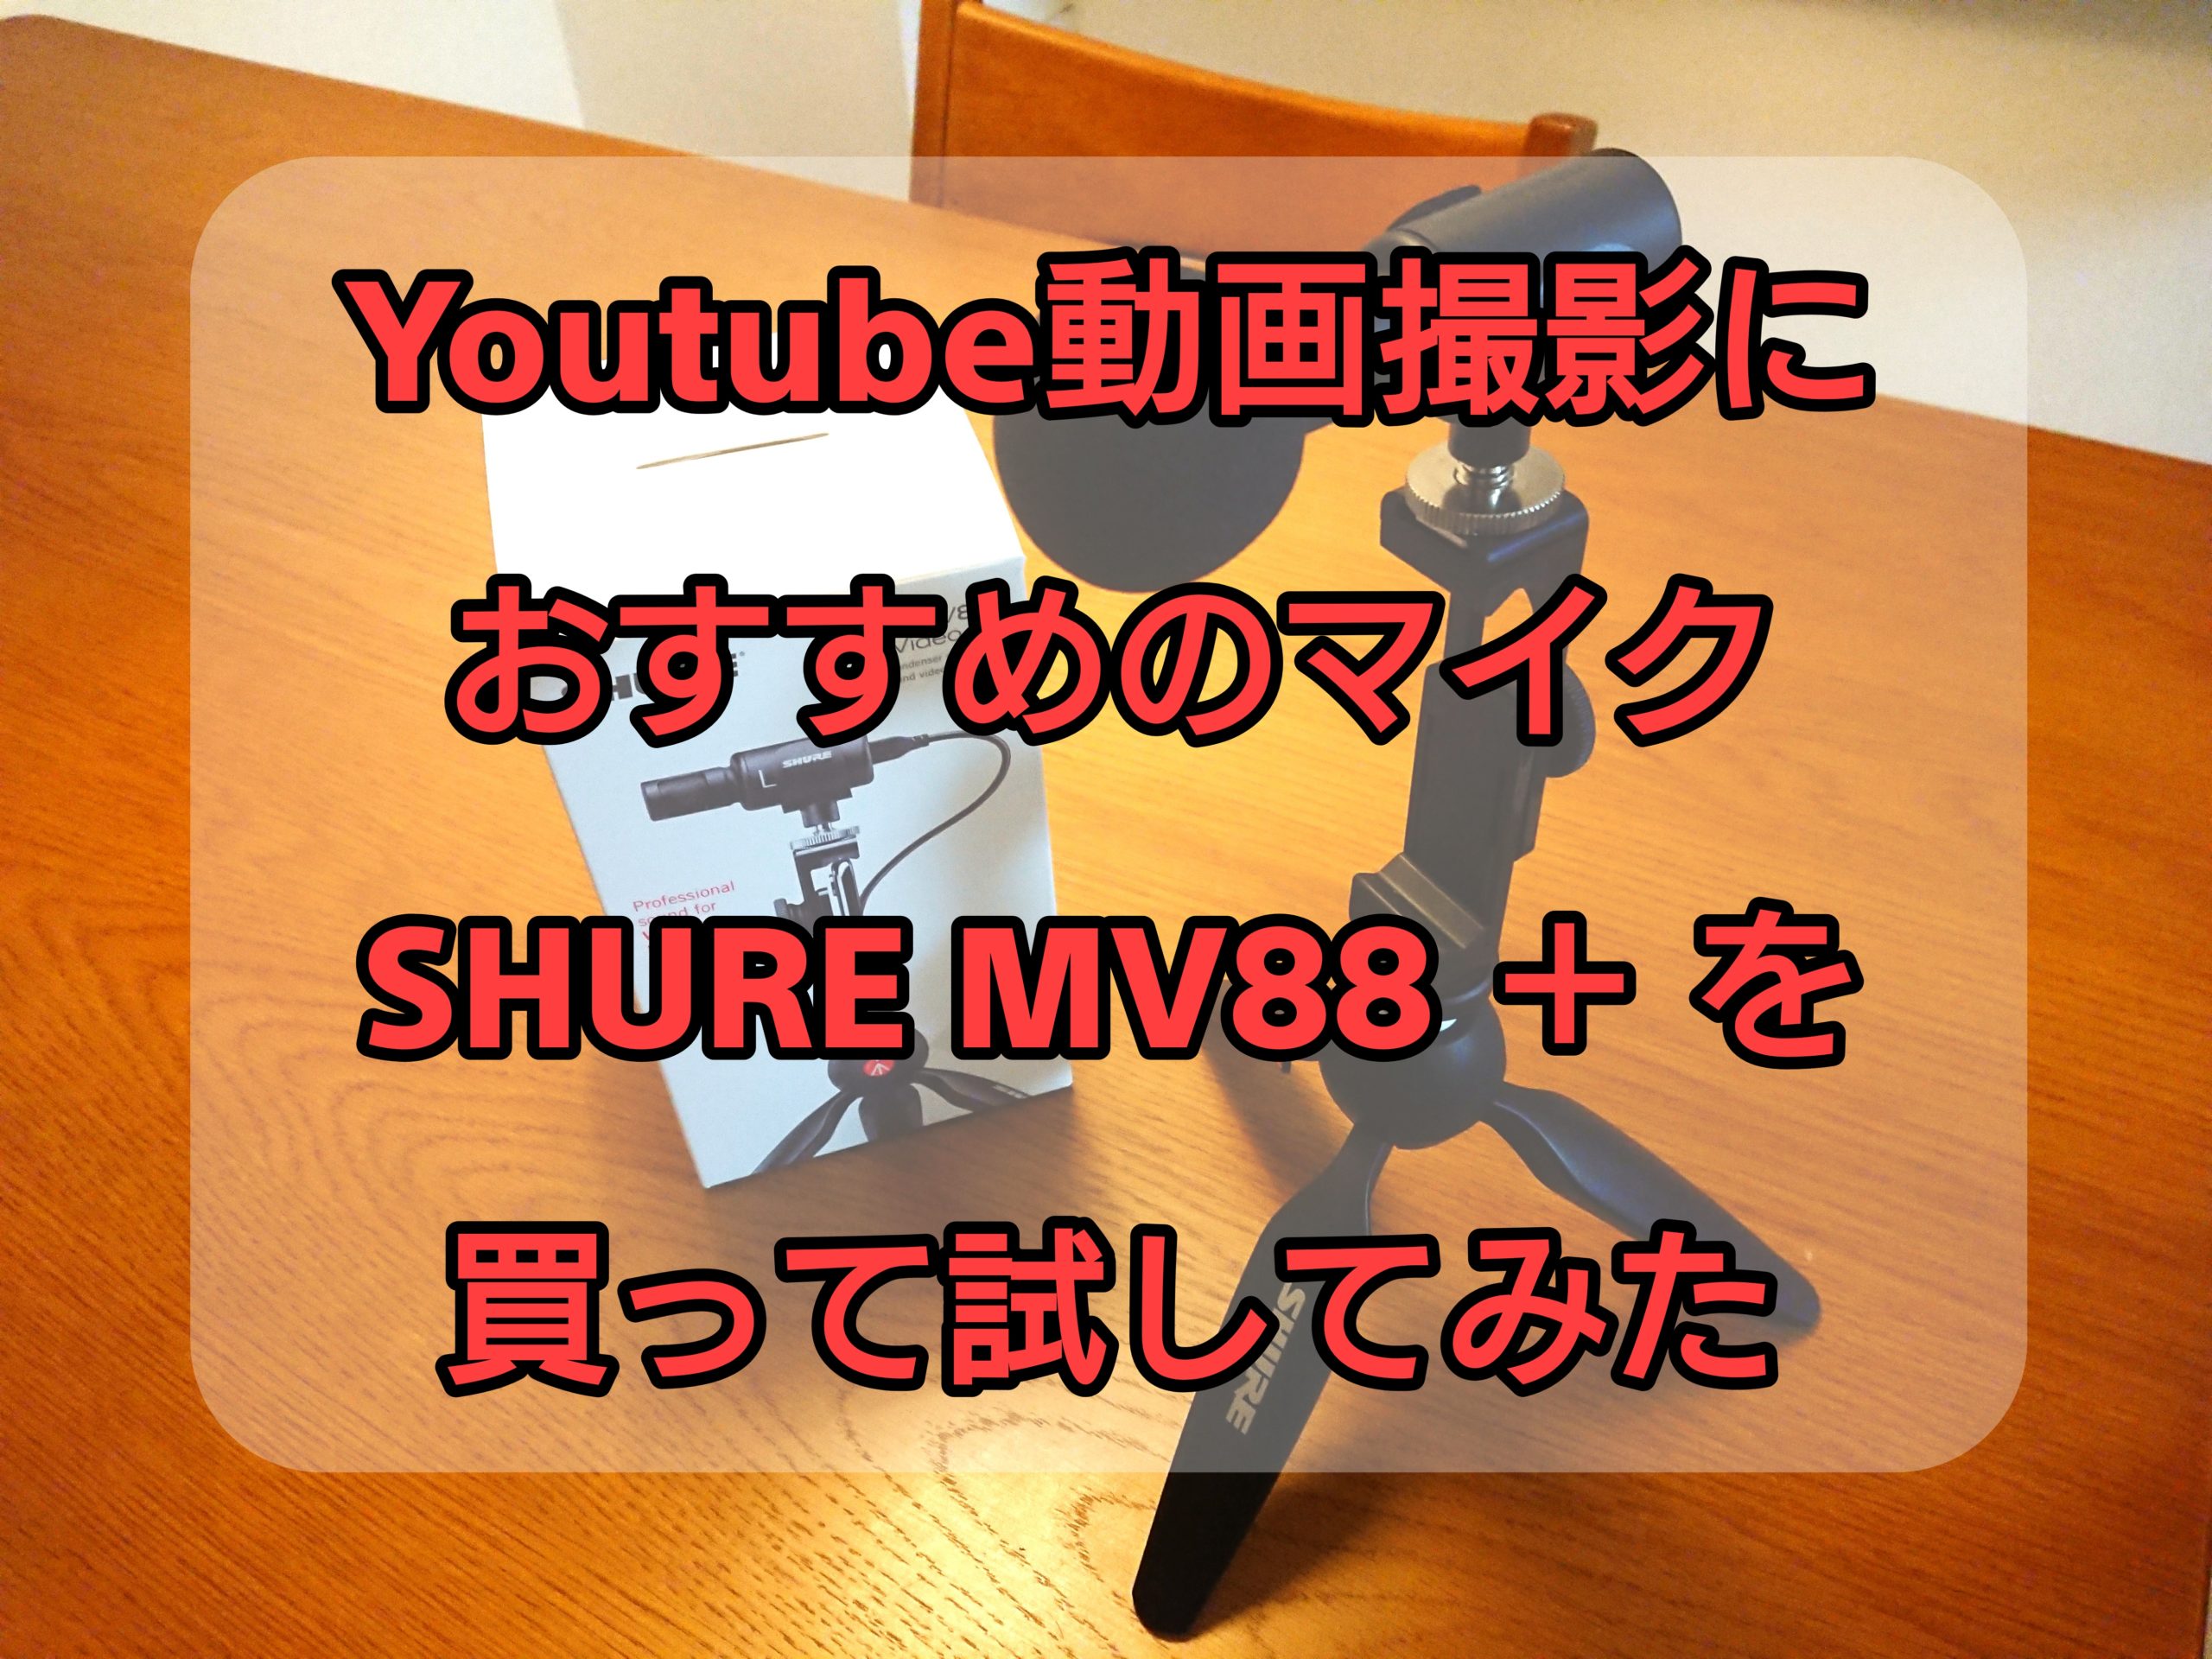 Youtube動画撮影におすすめのマイク【SHUREMV88＋を買って試してみた】